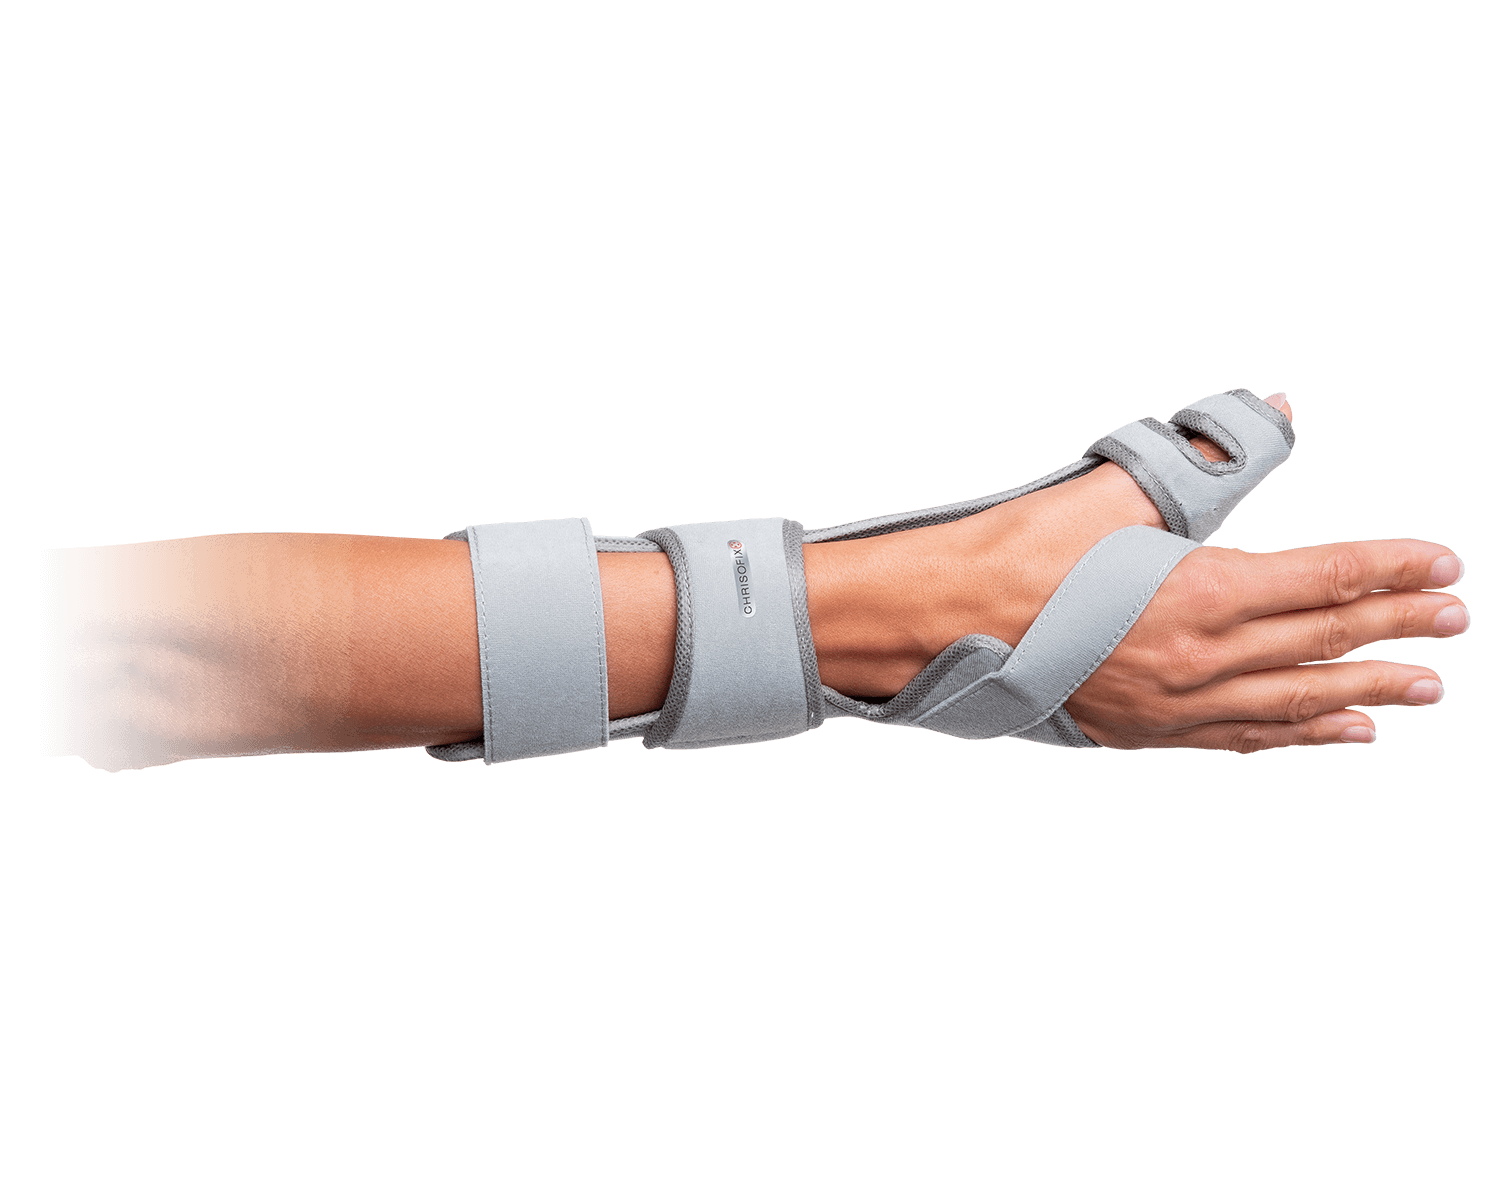 Universal wrist & thumb orthosis for emergency